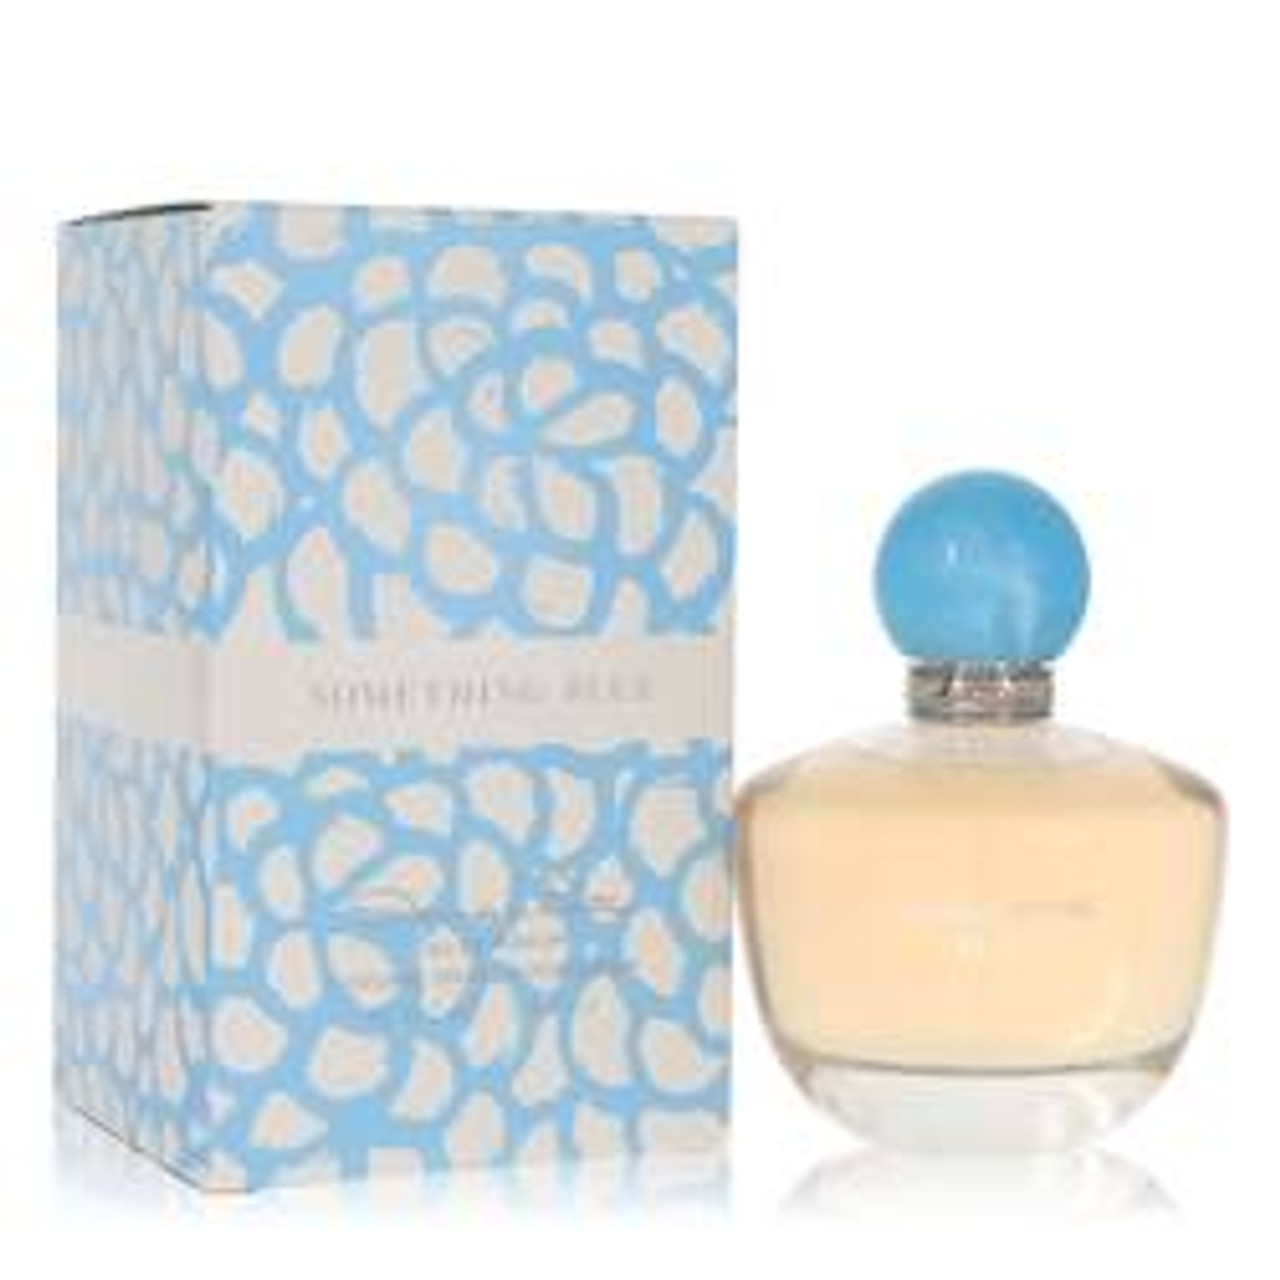 Something Blue Perfume By Oscar De La Renta Eau De Parfum Spray 3.4 oz for Women - [From 136.00 - Choose pk Qty ] - *Ships from Miami